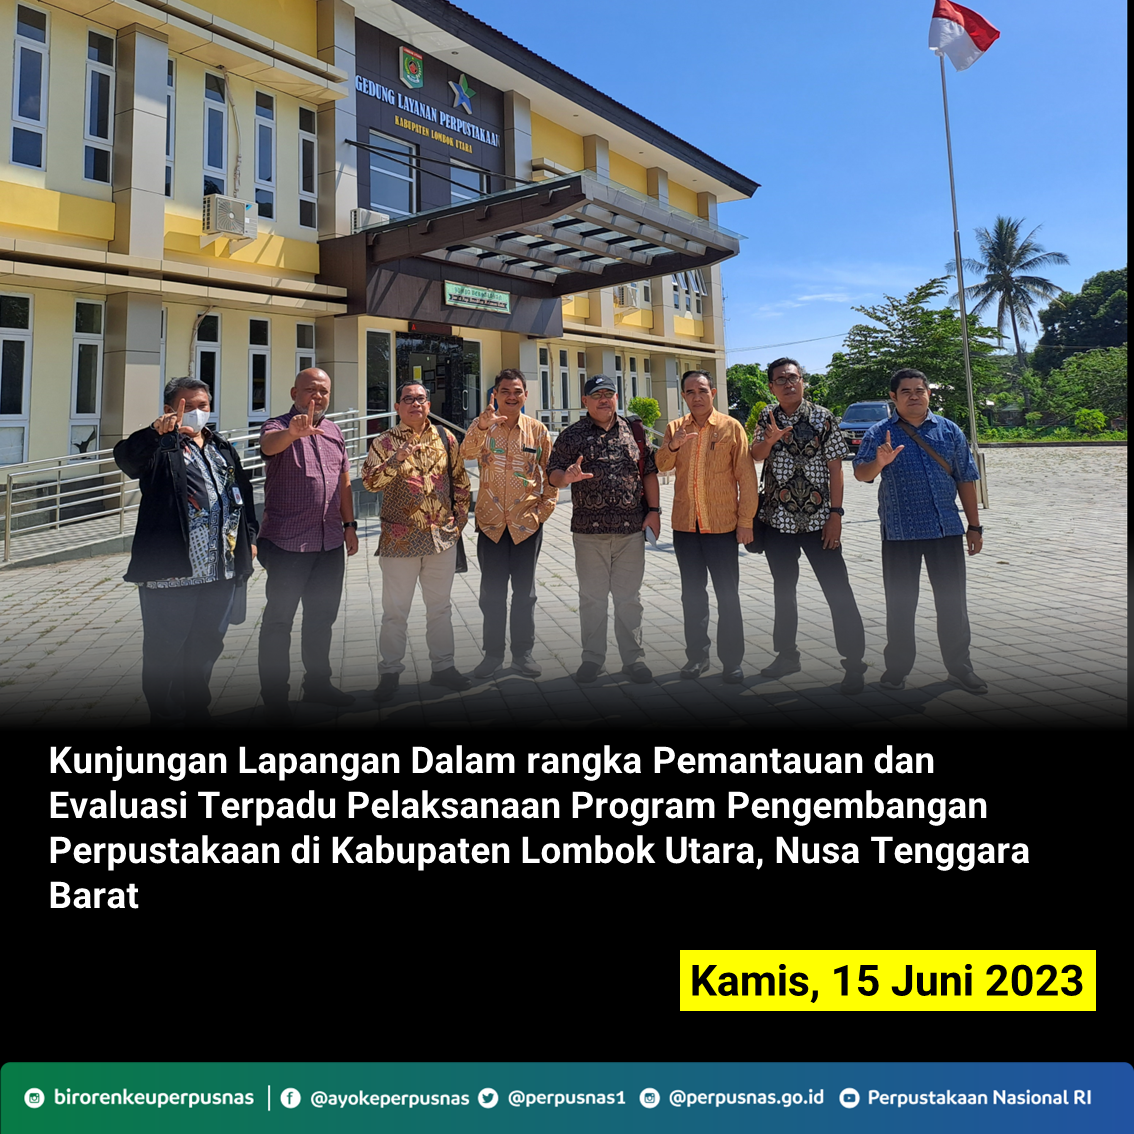 Kunjungan Lapangan Dalam Rangka Pemantauan dan Evaluasi Terpadu Pelaksanaan Program Pengembangan Perpustakaan di Kabupaten Lombok Utara